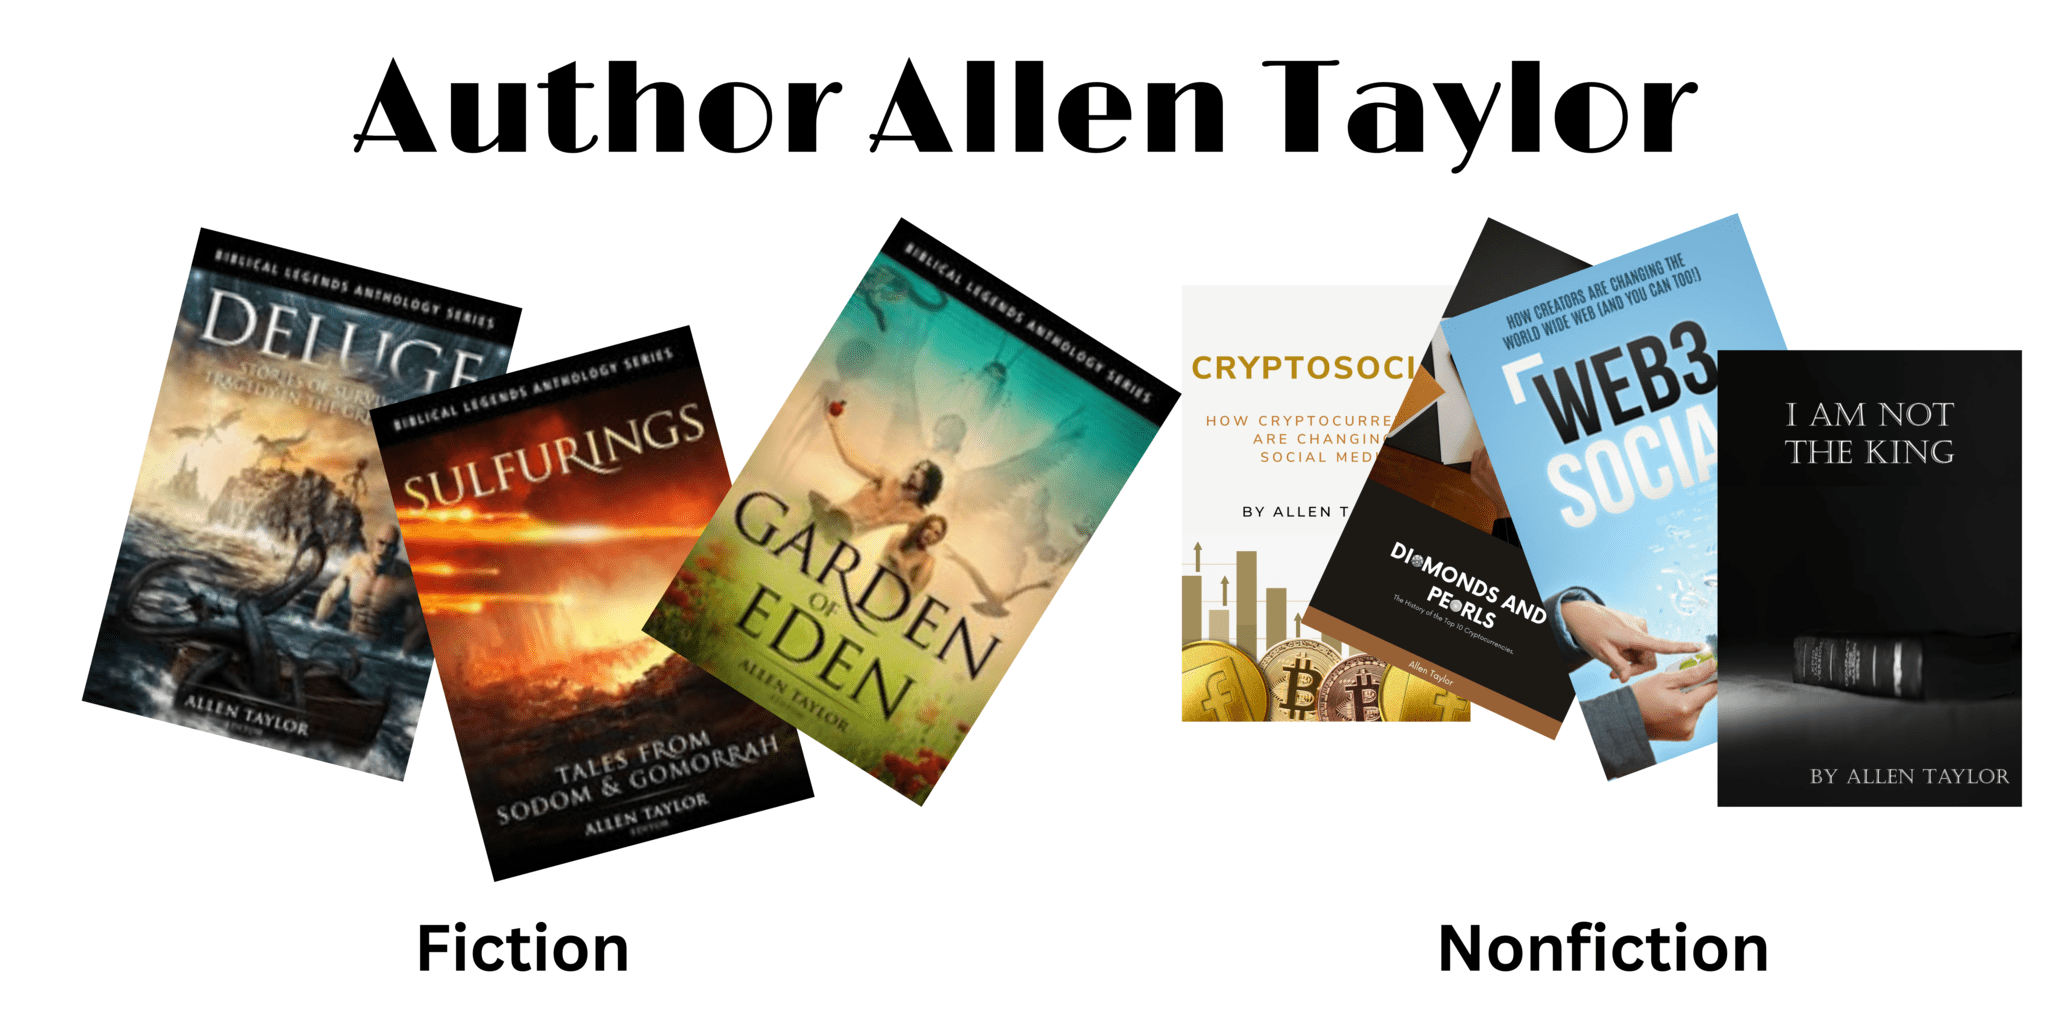 Author Allen Taylor's cover